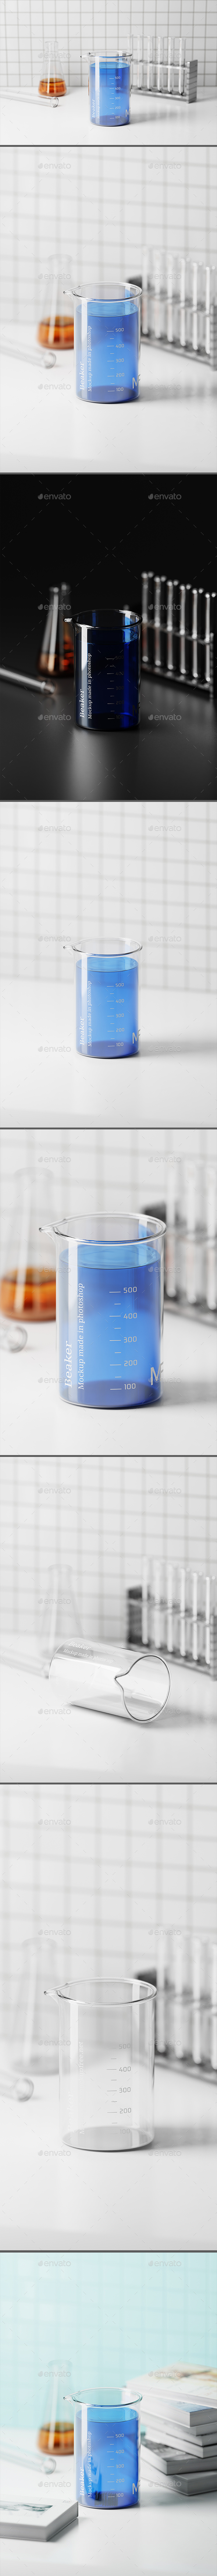 [DOWNLOAD]Beaker Mockups in a Laboratory Background